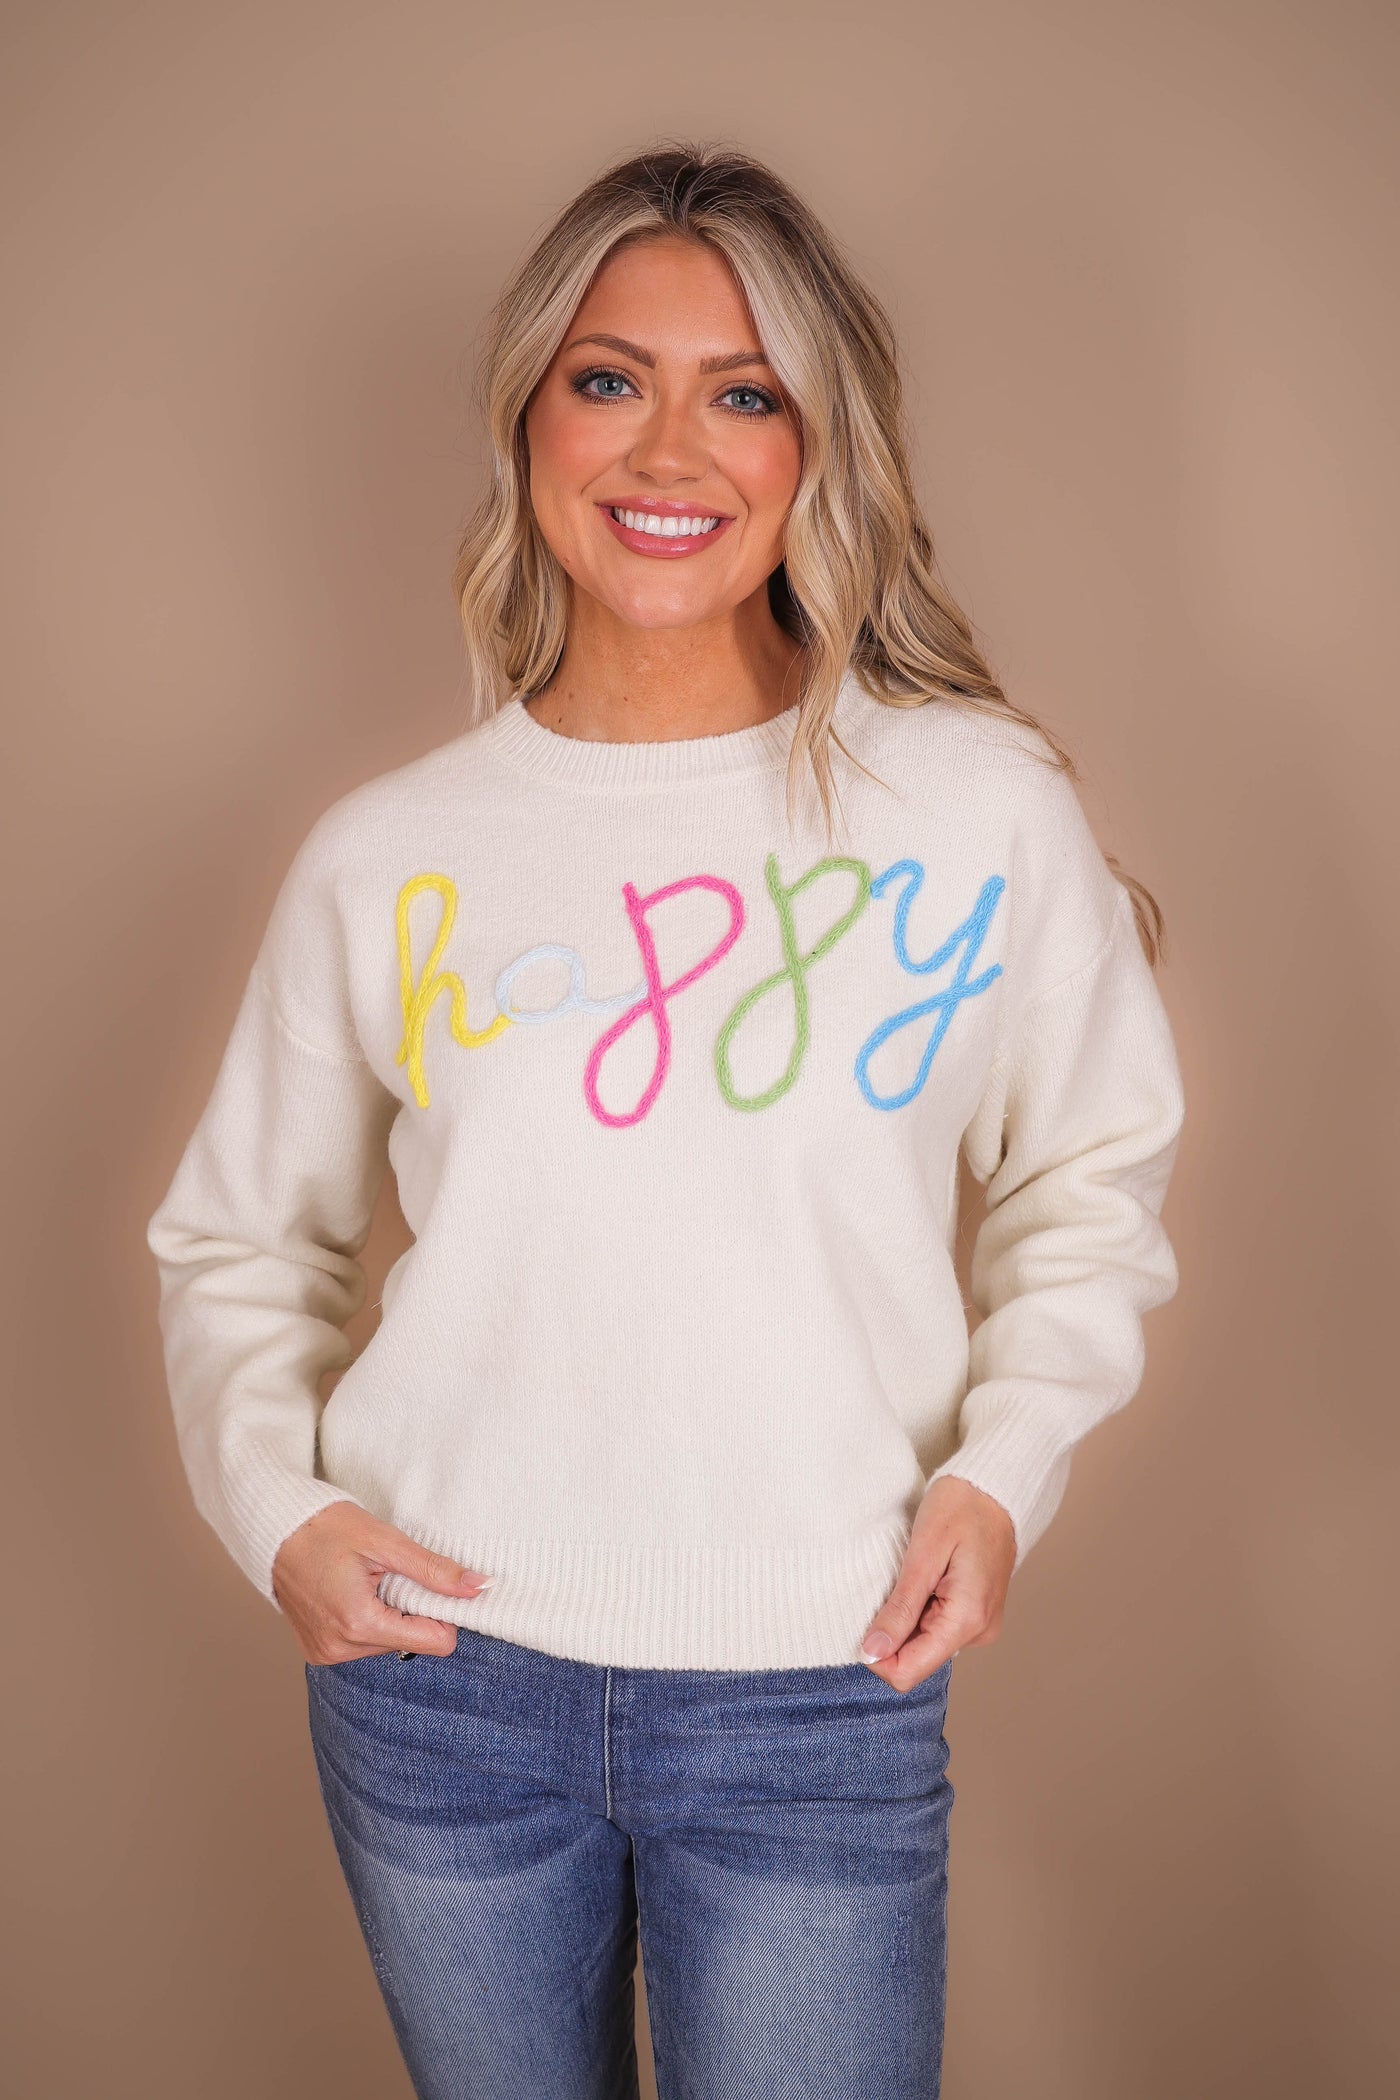 HAPPY Knit Sweater- Rainbow Happy Sweater- Cozy White Sweater